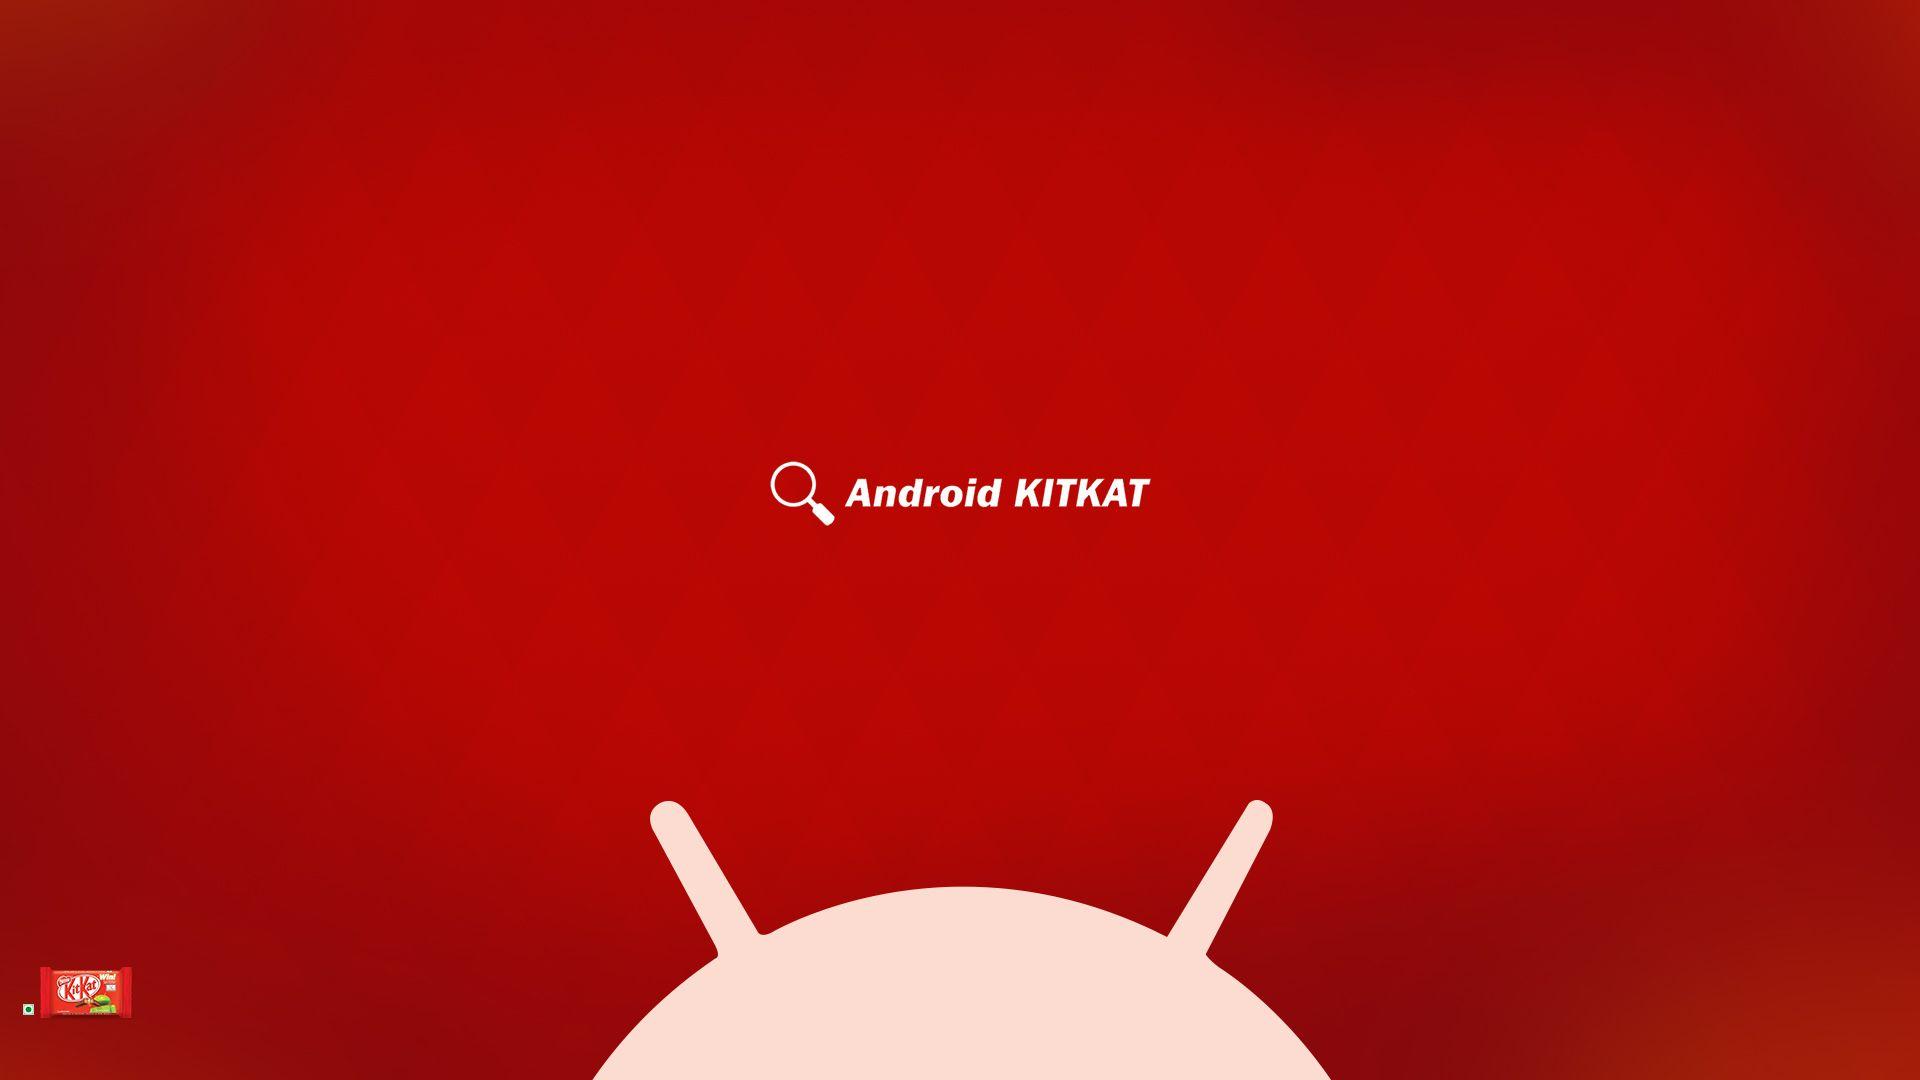 android kitkat wallpaper hd 1080p